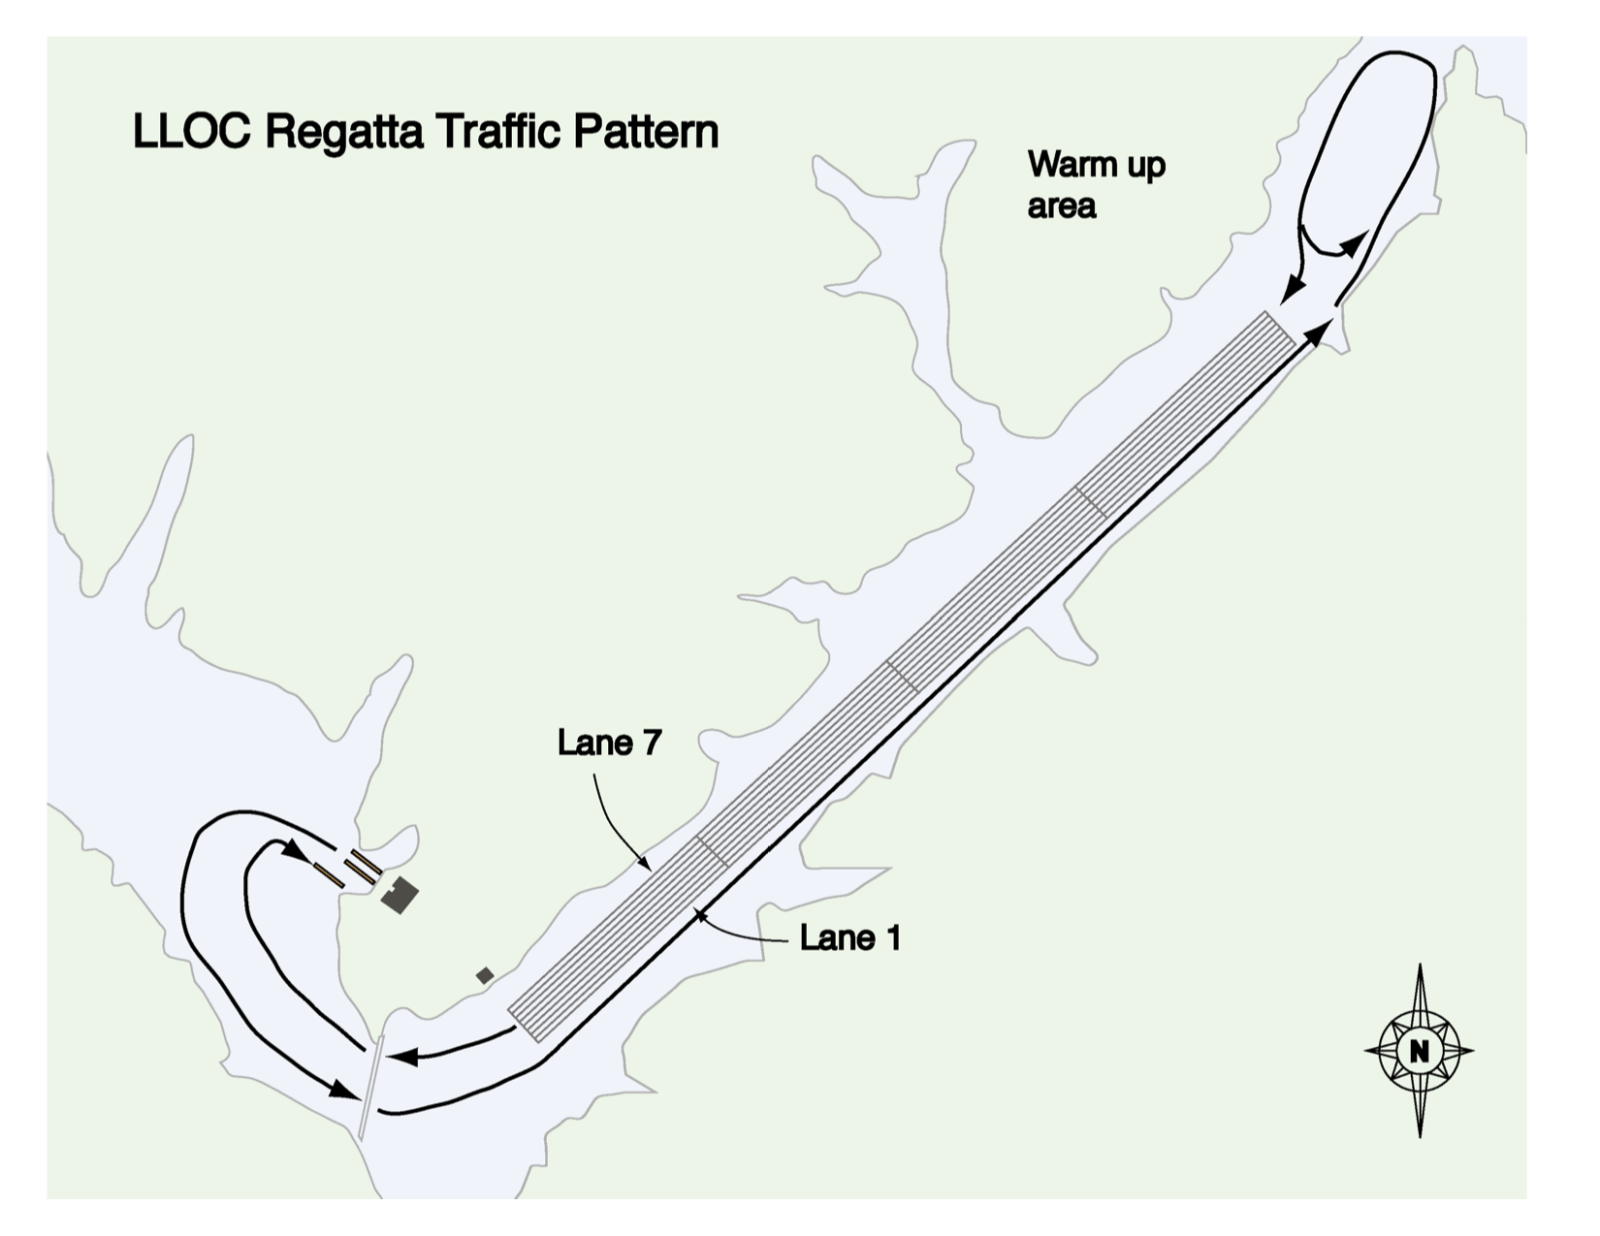 Regatta practice traffic pattern